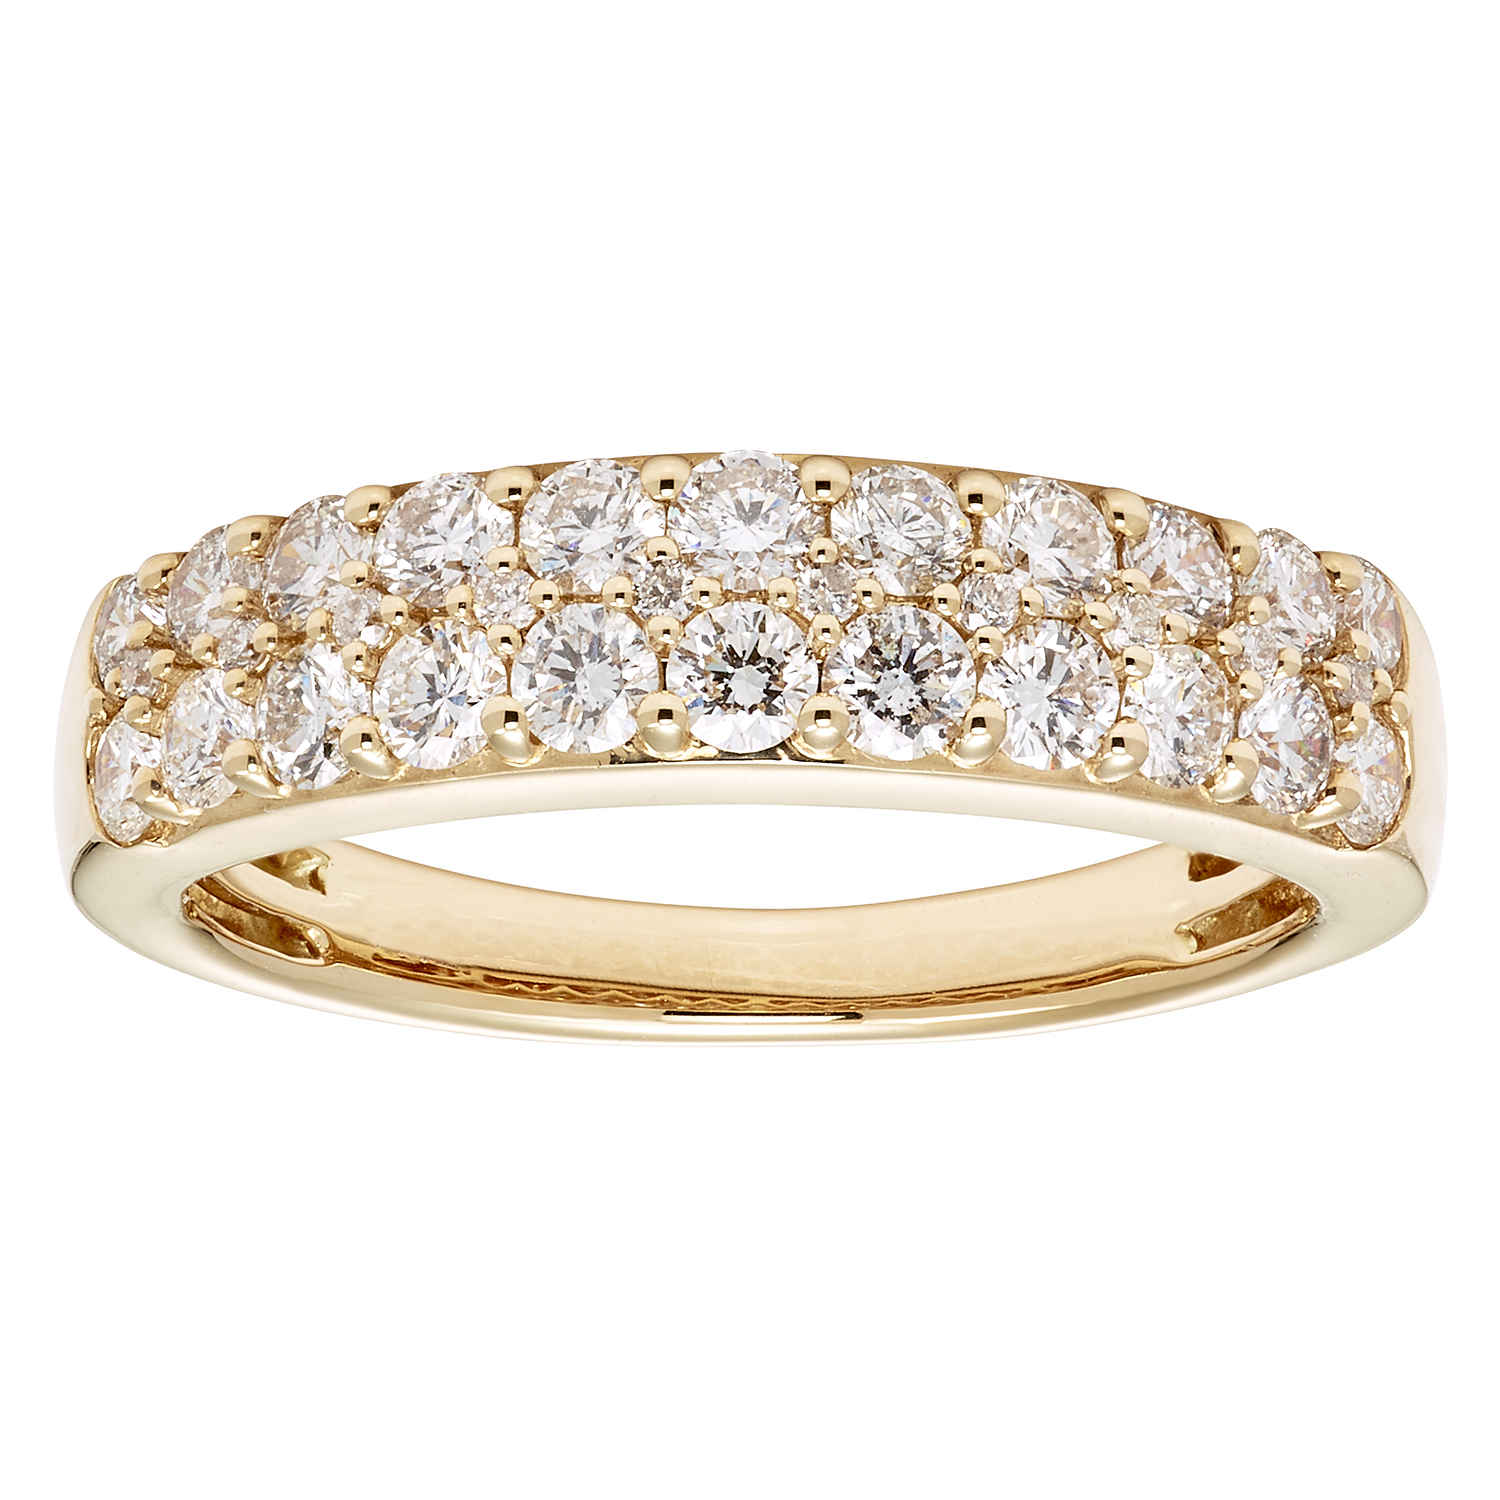 Cya K Certified Diamond Wedding Ring 1ct 14k Yellow Gold R124129y-9 Size 9 In Gold Tone,yellow